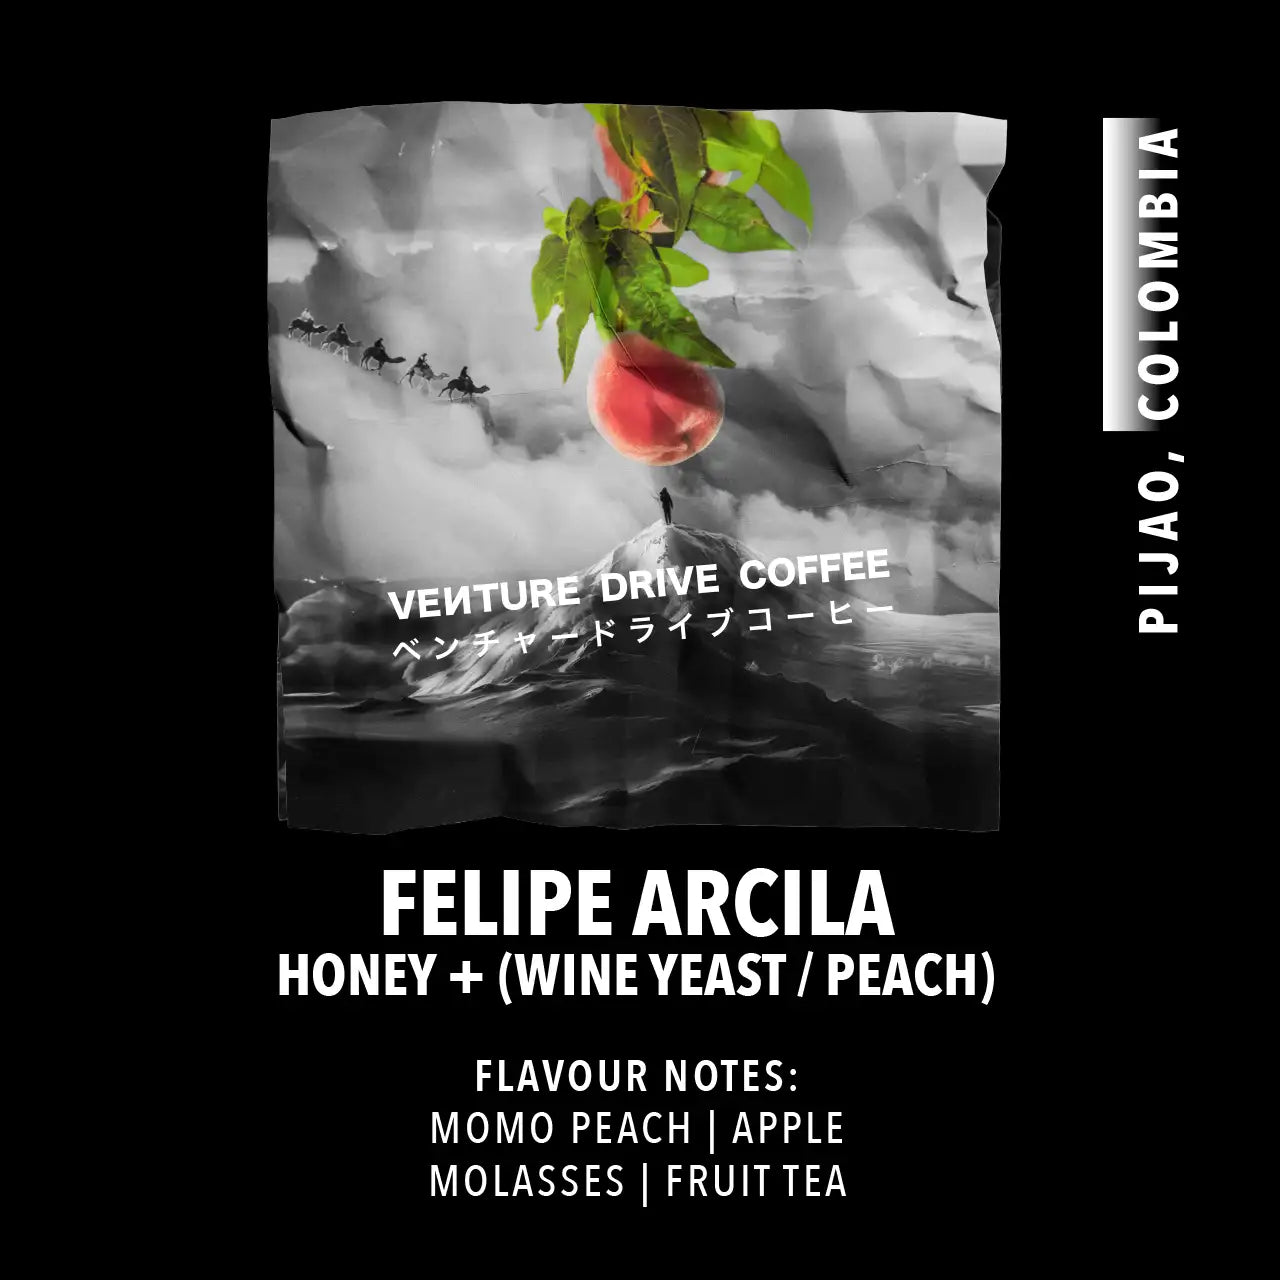 Felipe Arcila Honey + Wine Yeast / Peach (Colombia)